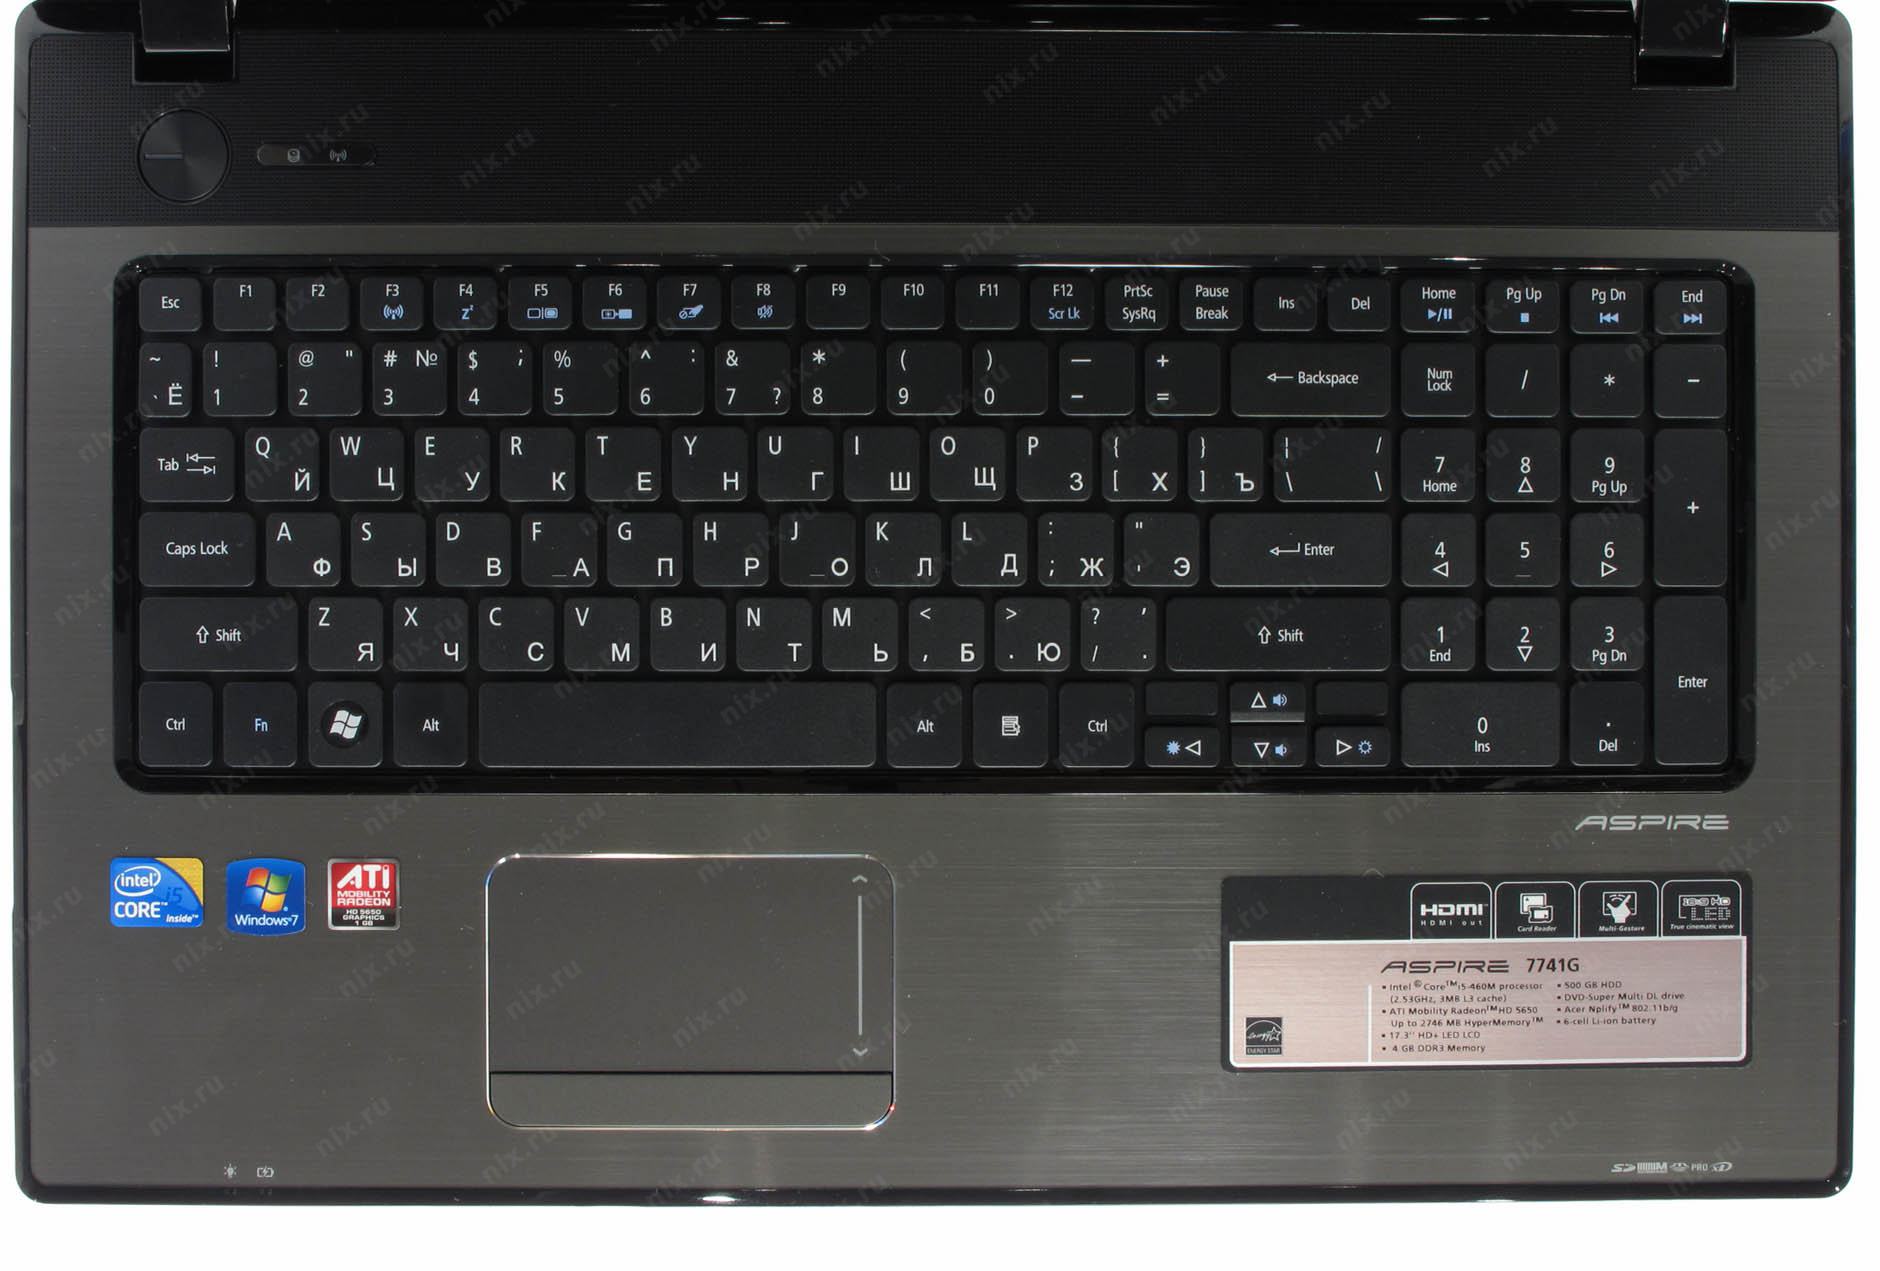 Aspire 7741g. Acer Aspire 7552g-x926g64bikk. Acer Aspire 7552 g характеристики. Ноутбук Acer Aspire 7551g-n934g50bikk. Ноутбук Acer Aspire 7551g-n974g64bikk.